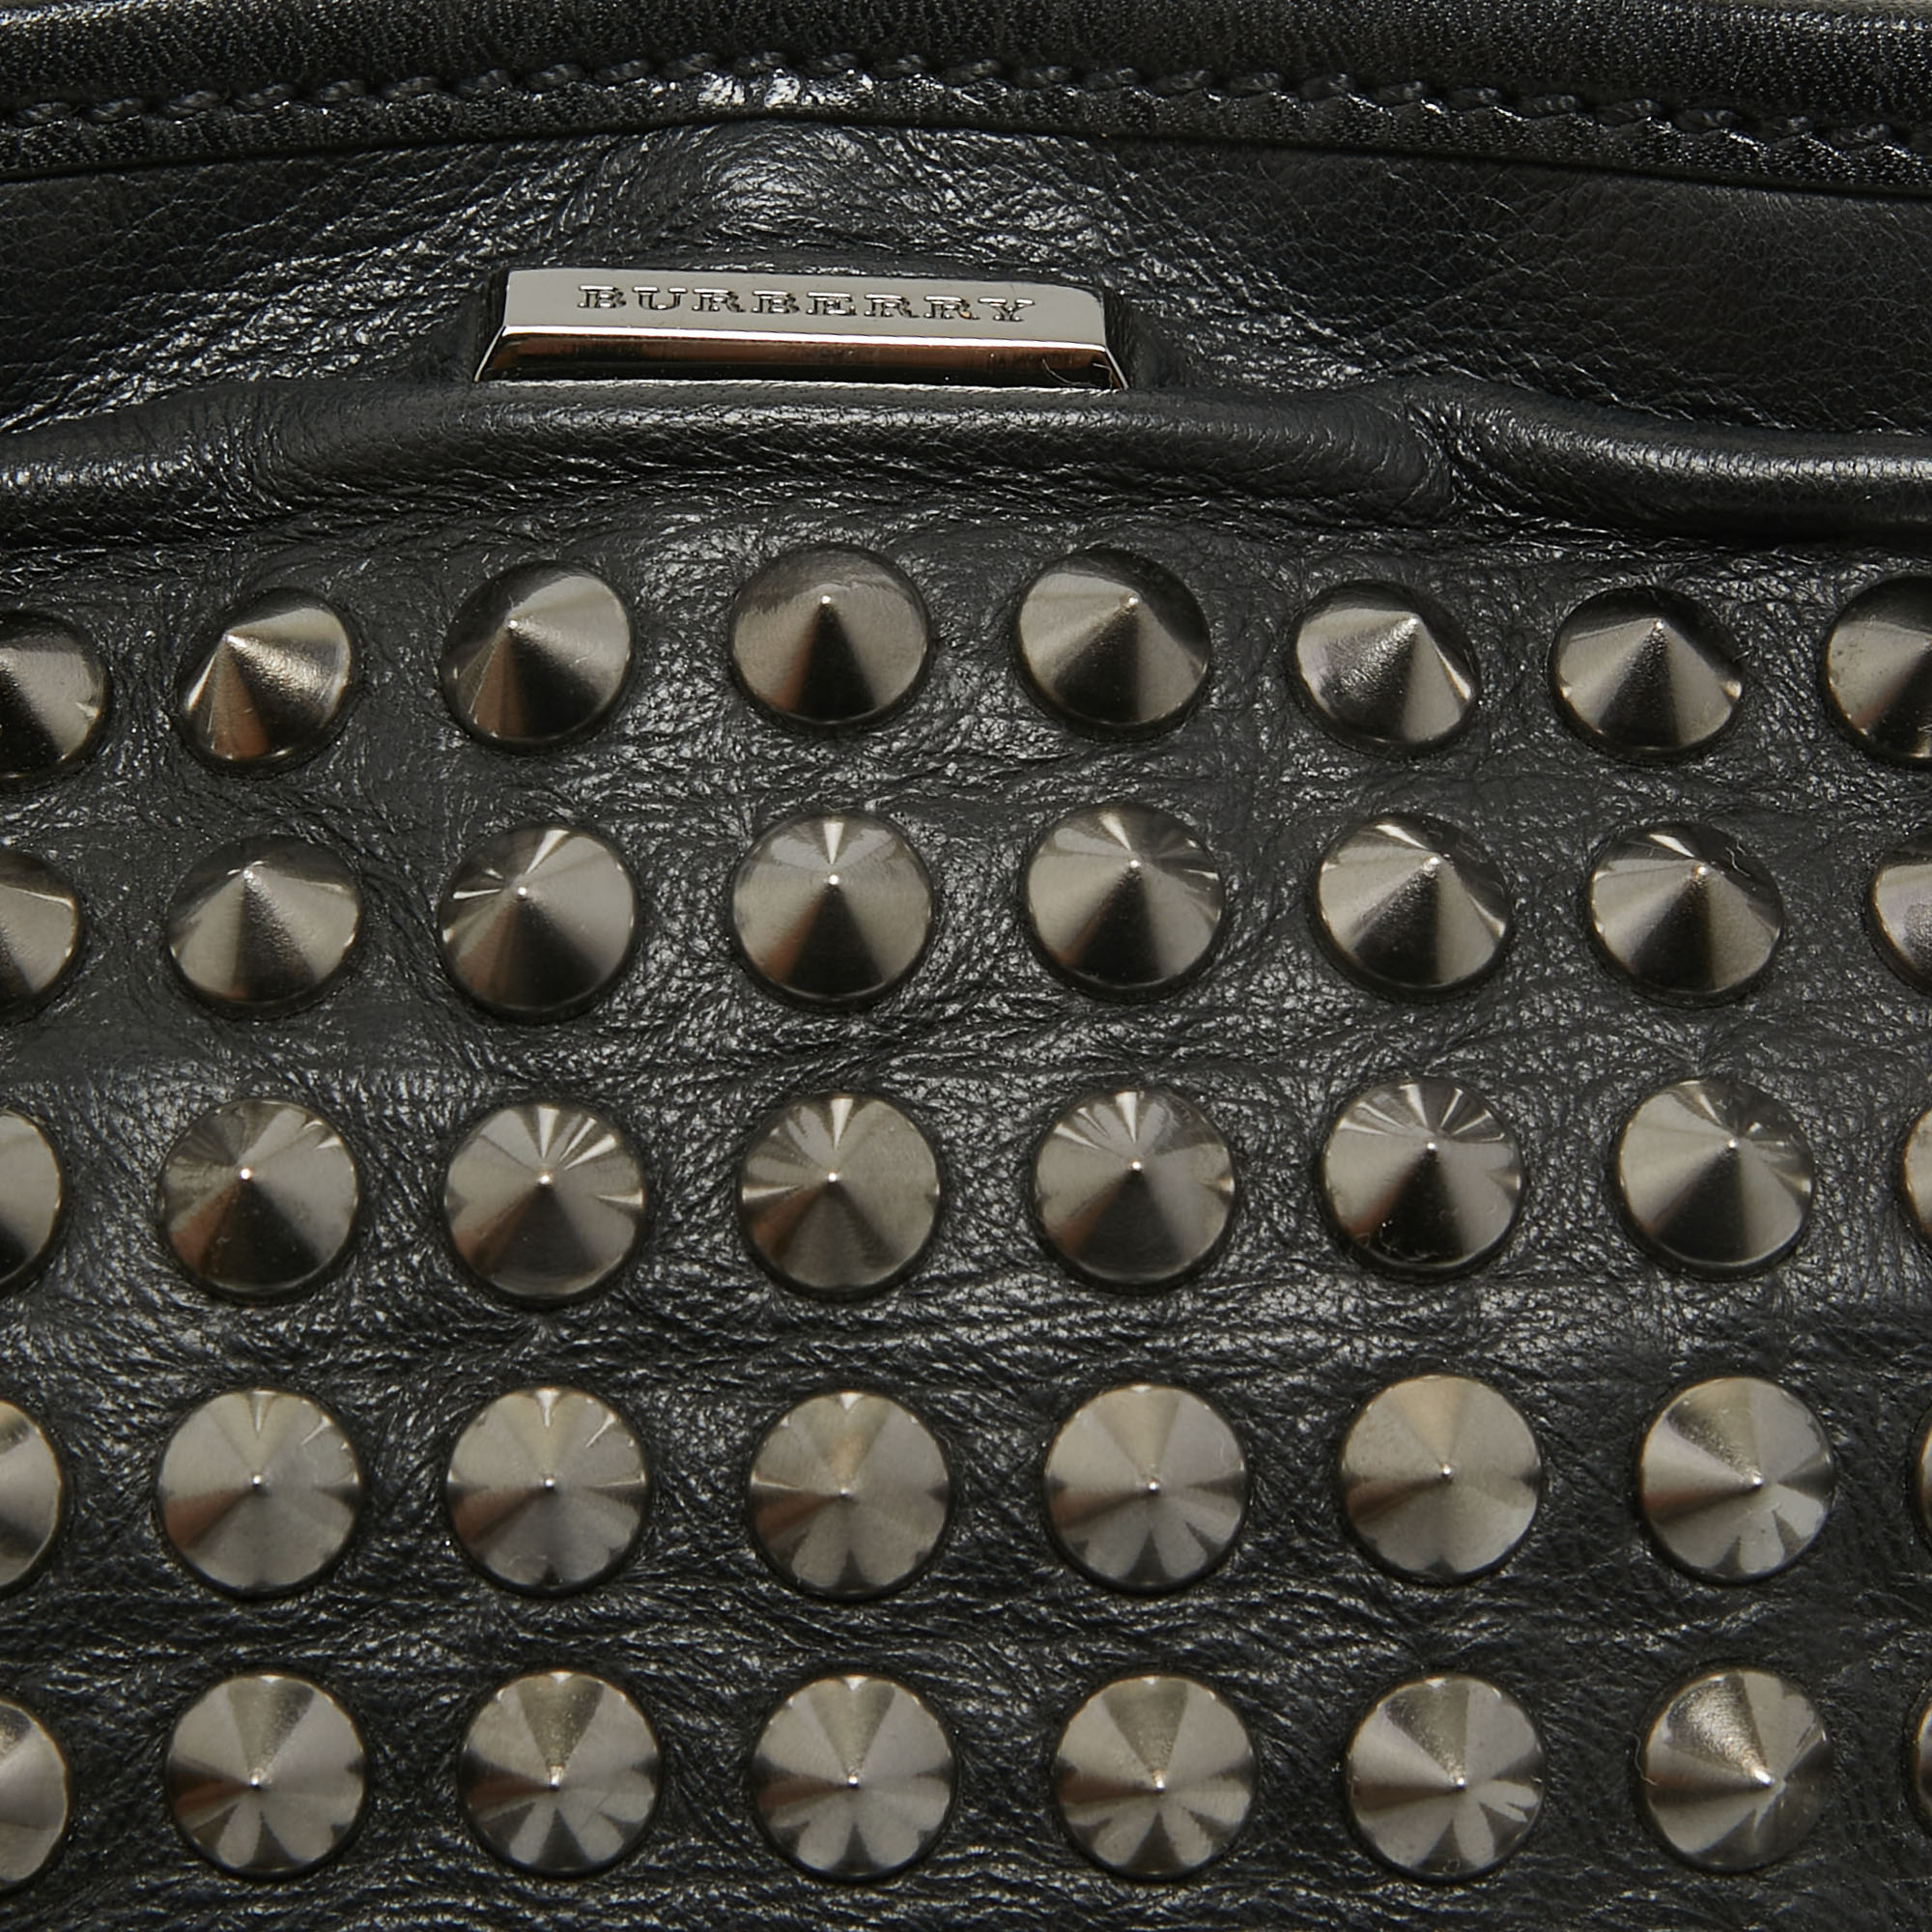 Burberry Black Studded Leather Edenham Crossbody Bag